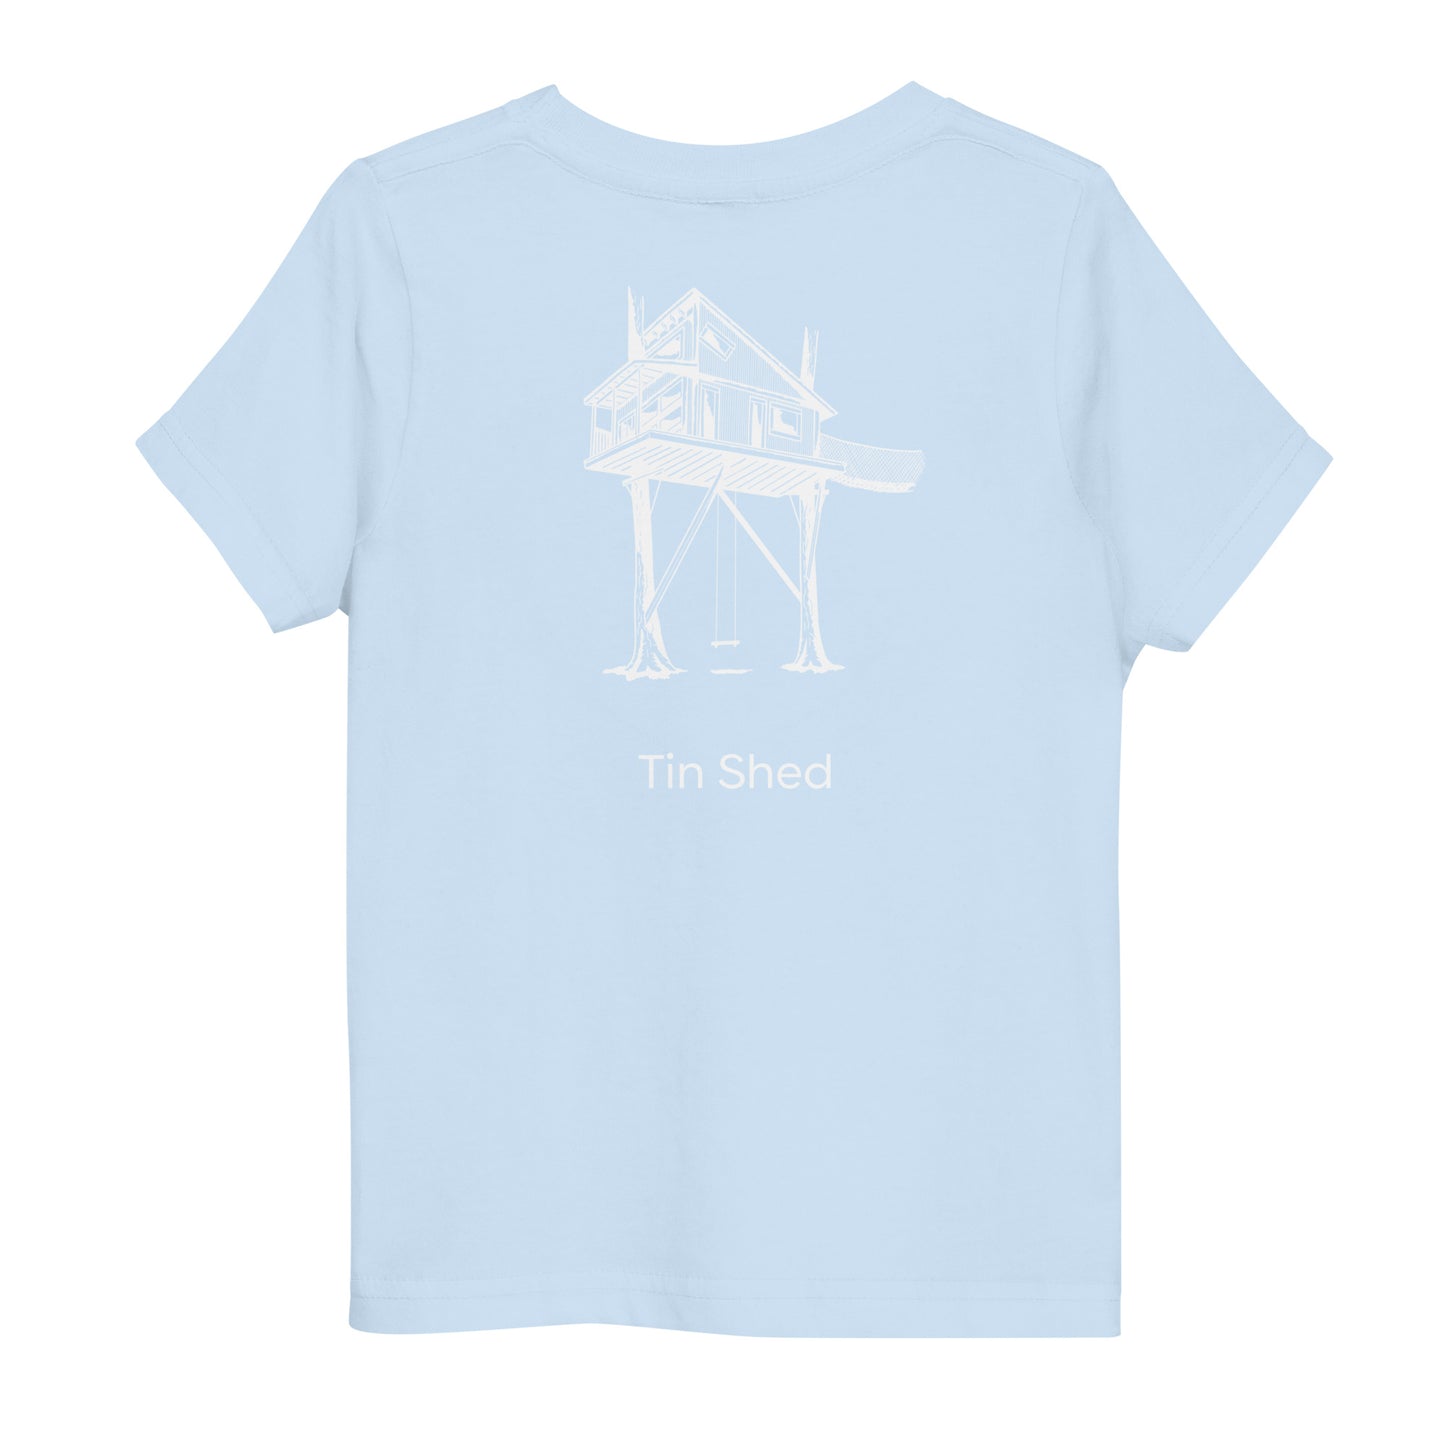 Tin Shed Toddler jersey t-shirt